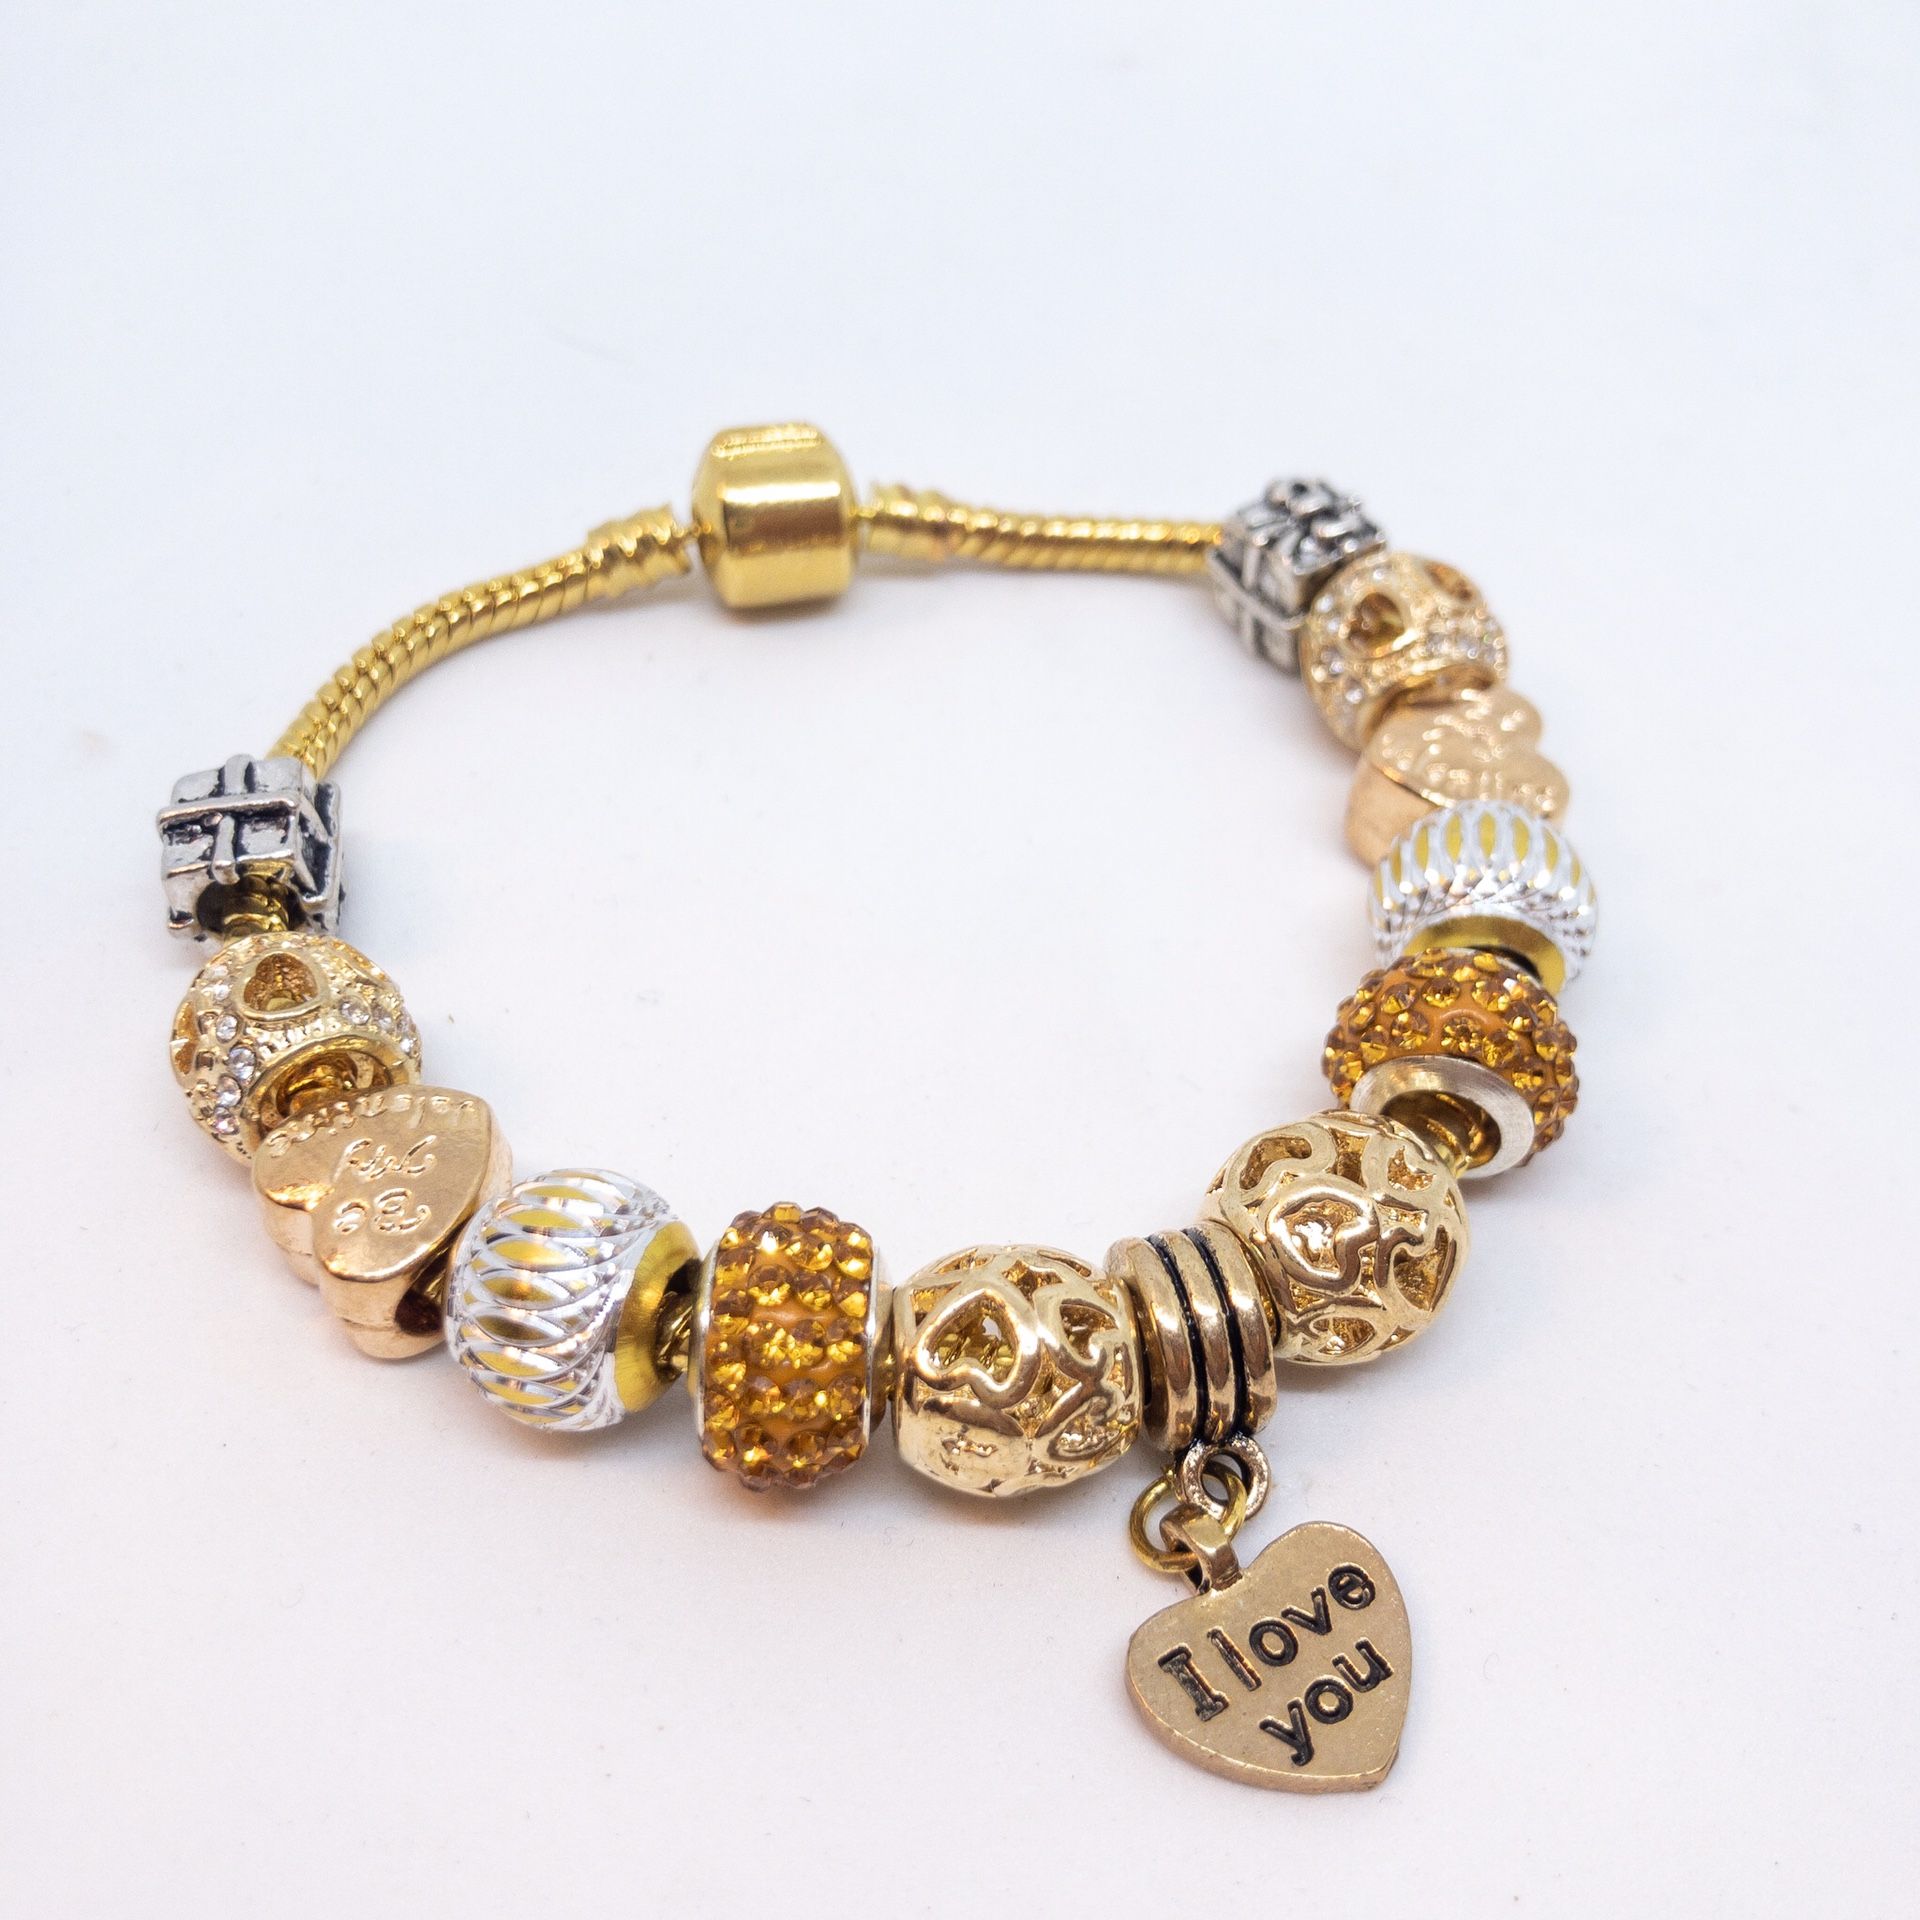 Gold Finished “I Love You” Charm Bracelet